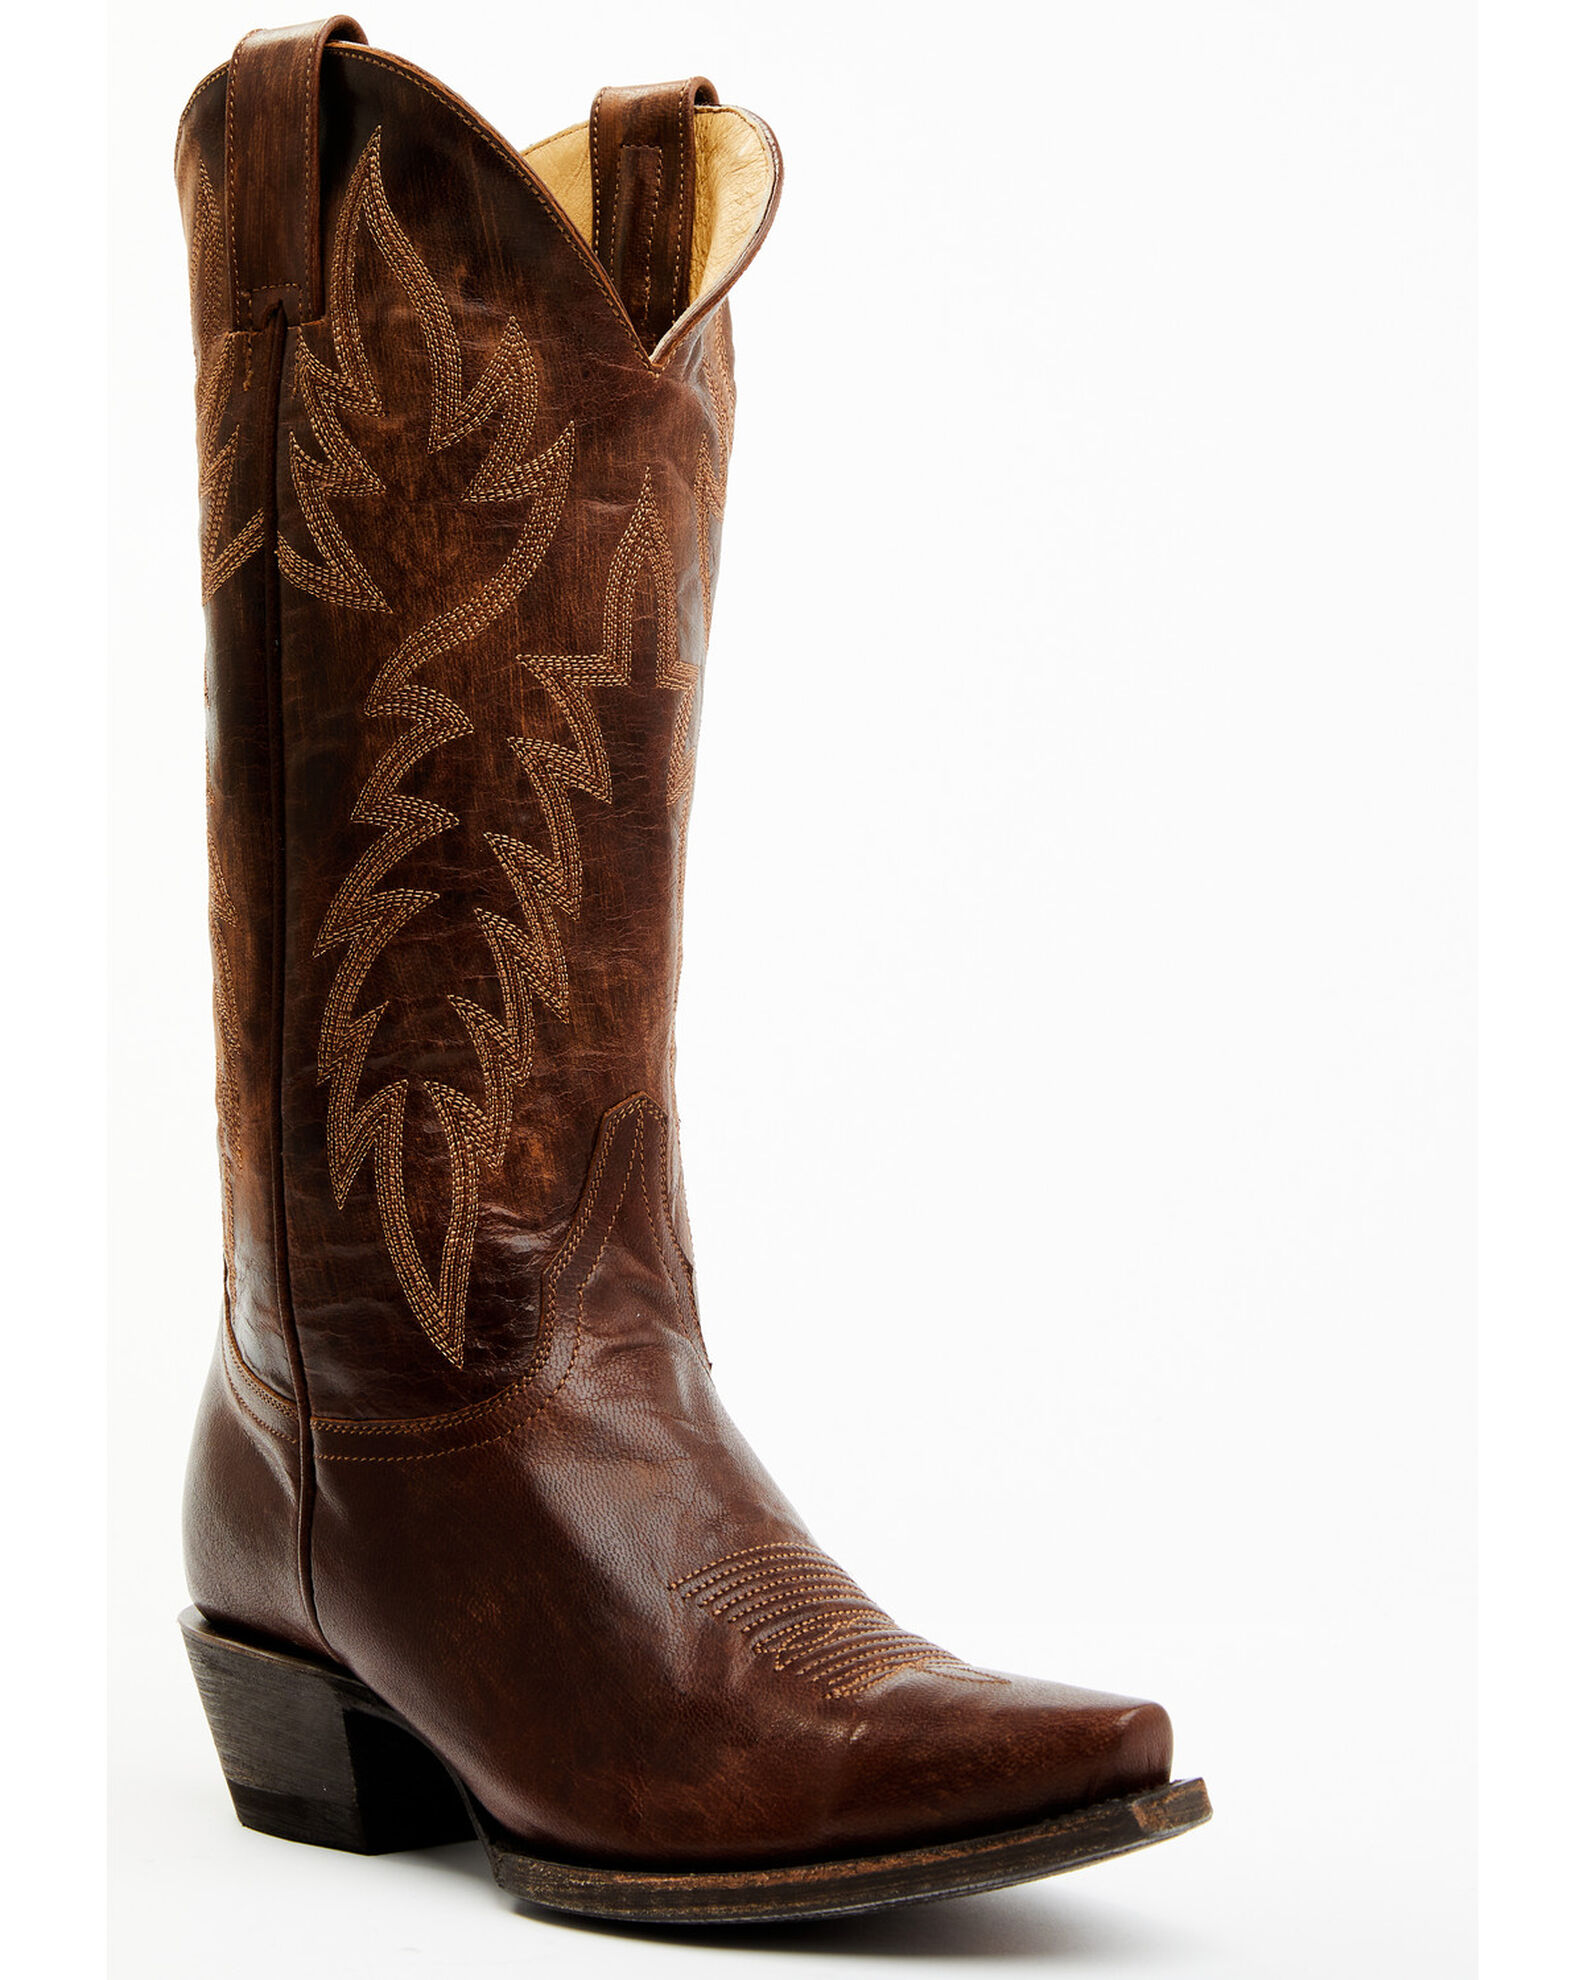 Product Name: Idyllwind Women's Wheeler Western Boot - Snip Toe